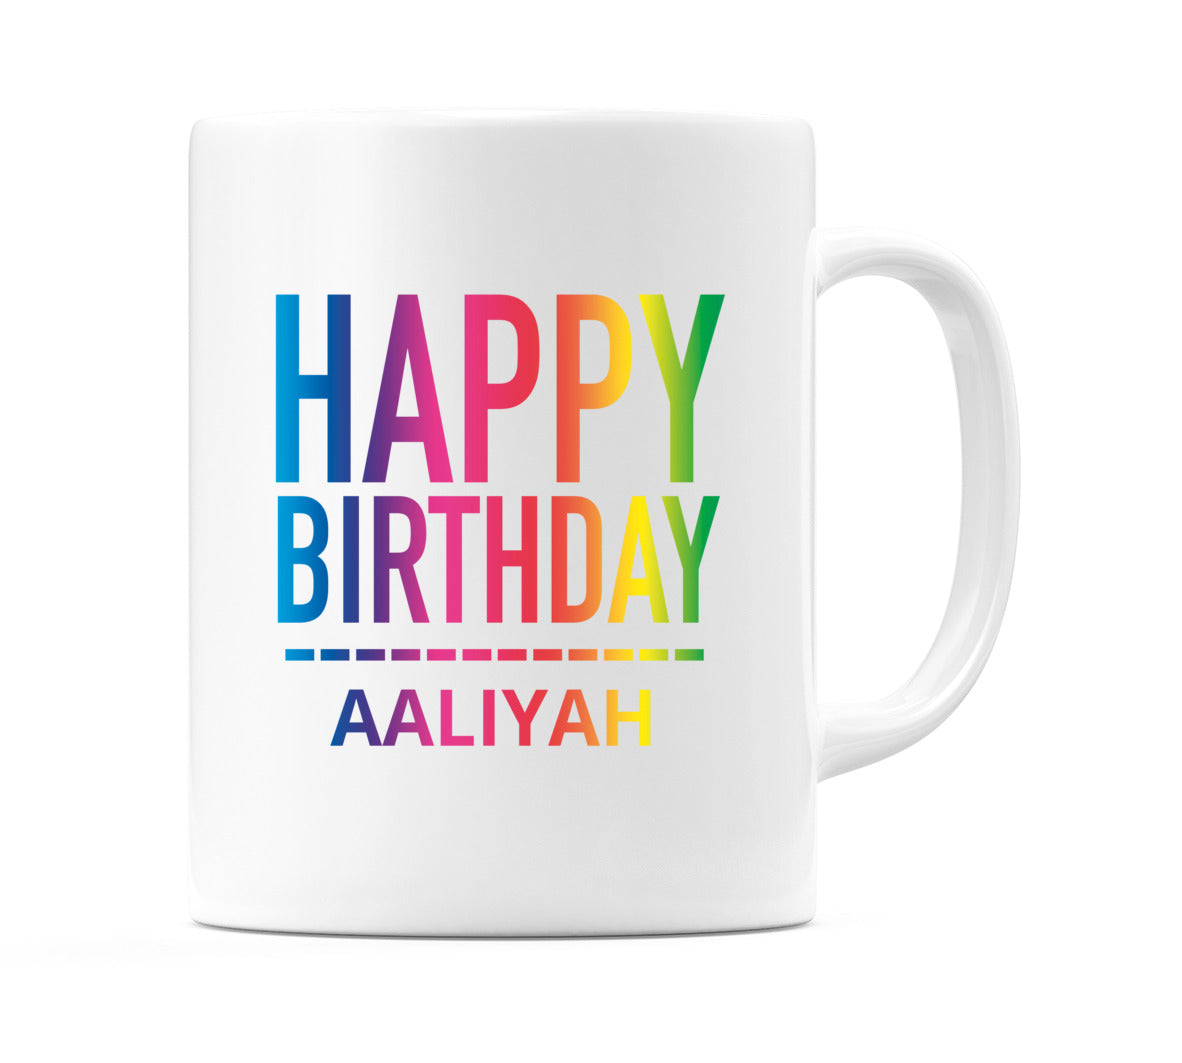 Happy Birthday Aaliyah (Rainbow) Mug Cup by WeDoMugs